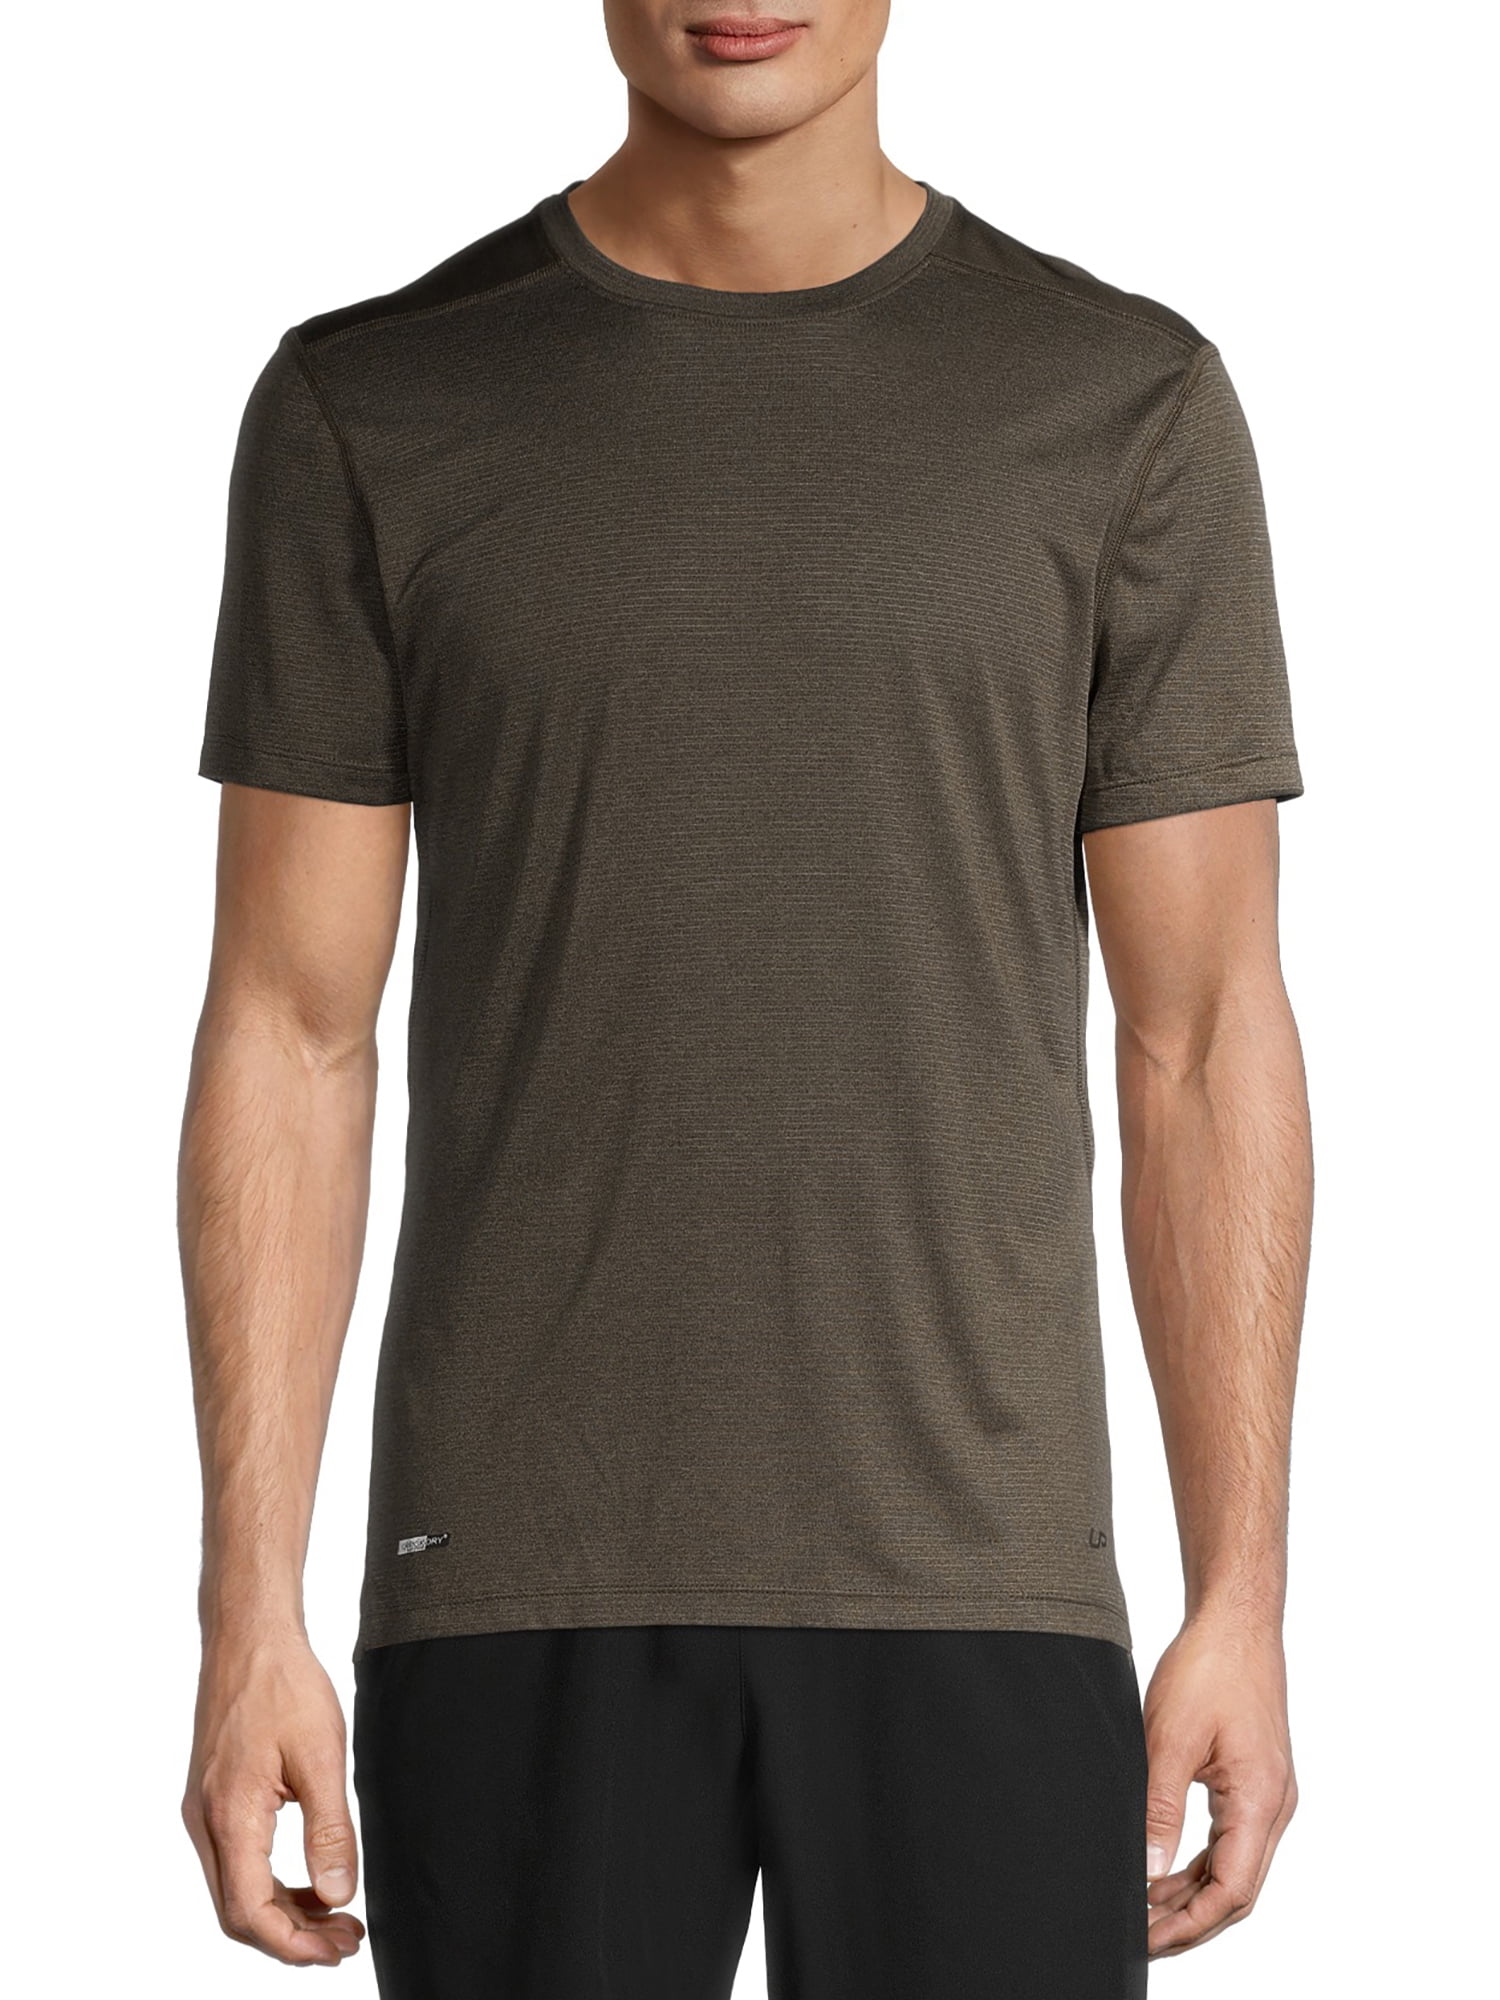 UniPro Men's Heather Training T-Shirt, up to Size 2XL - Walmart.com